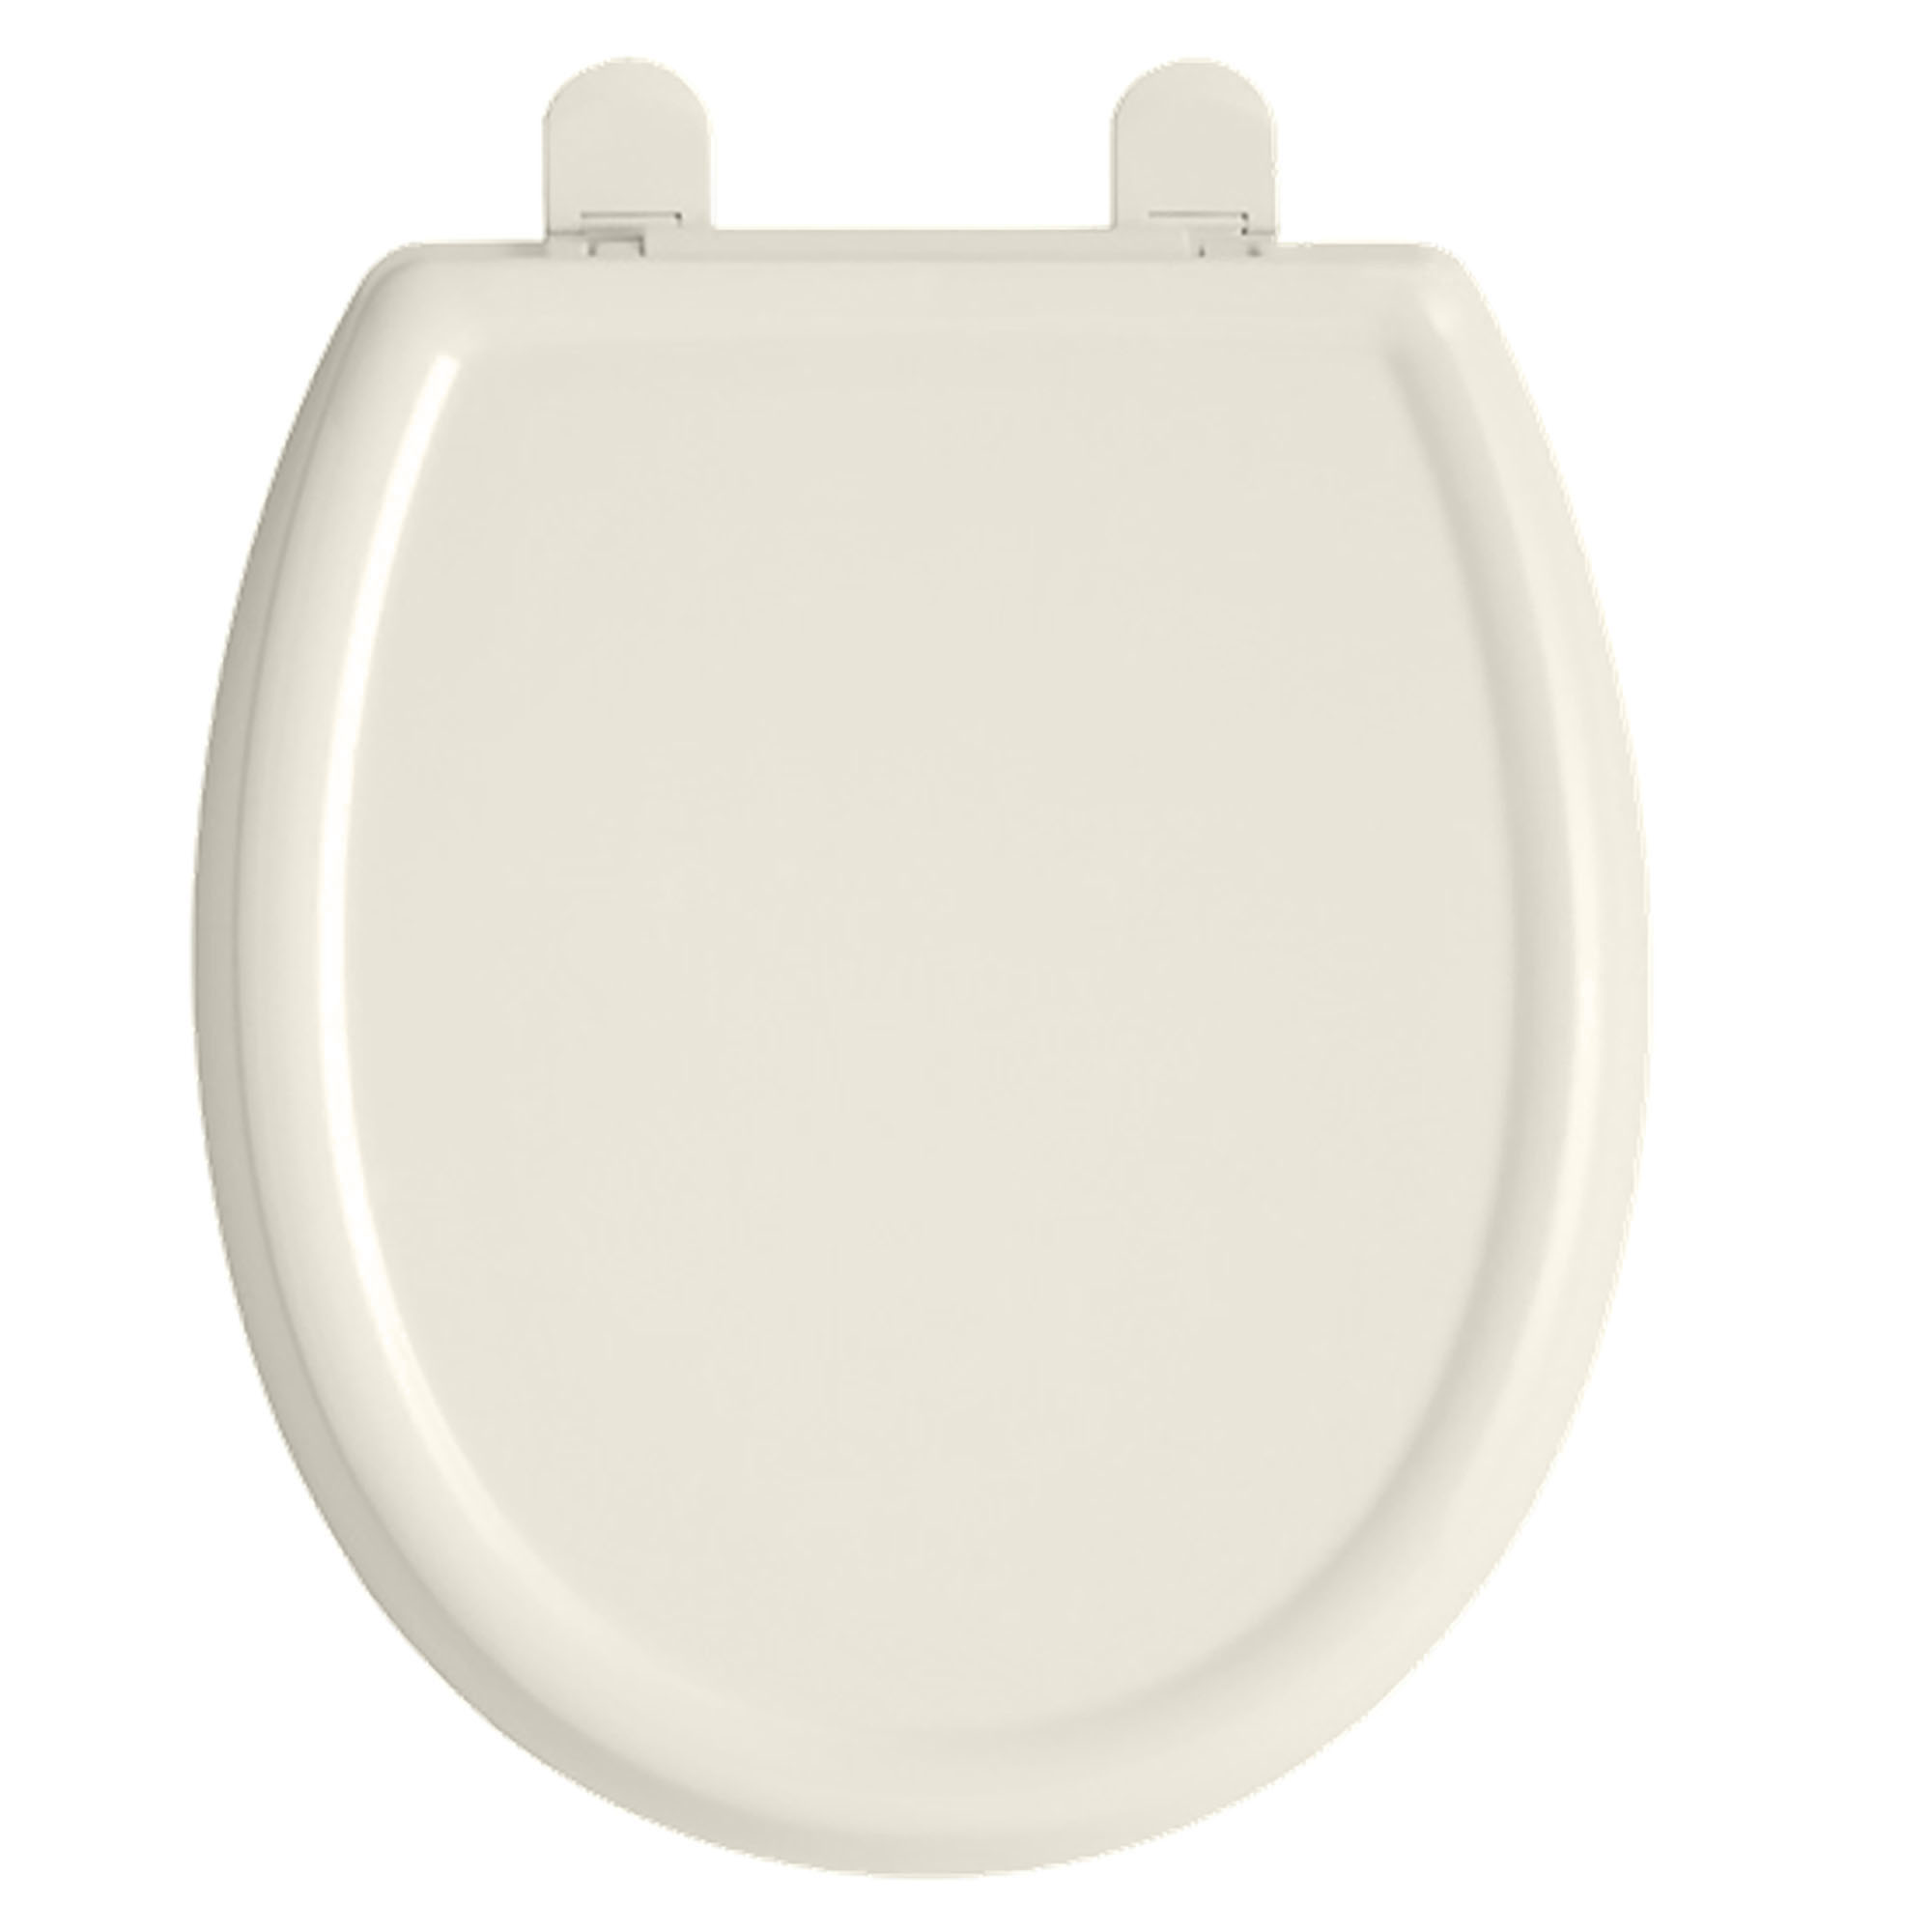 Cadet® 3 Slow-Close Elongated Toilet Seat